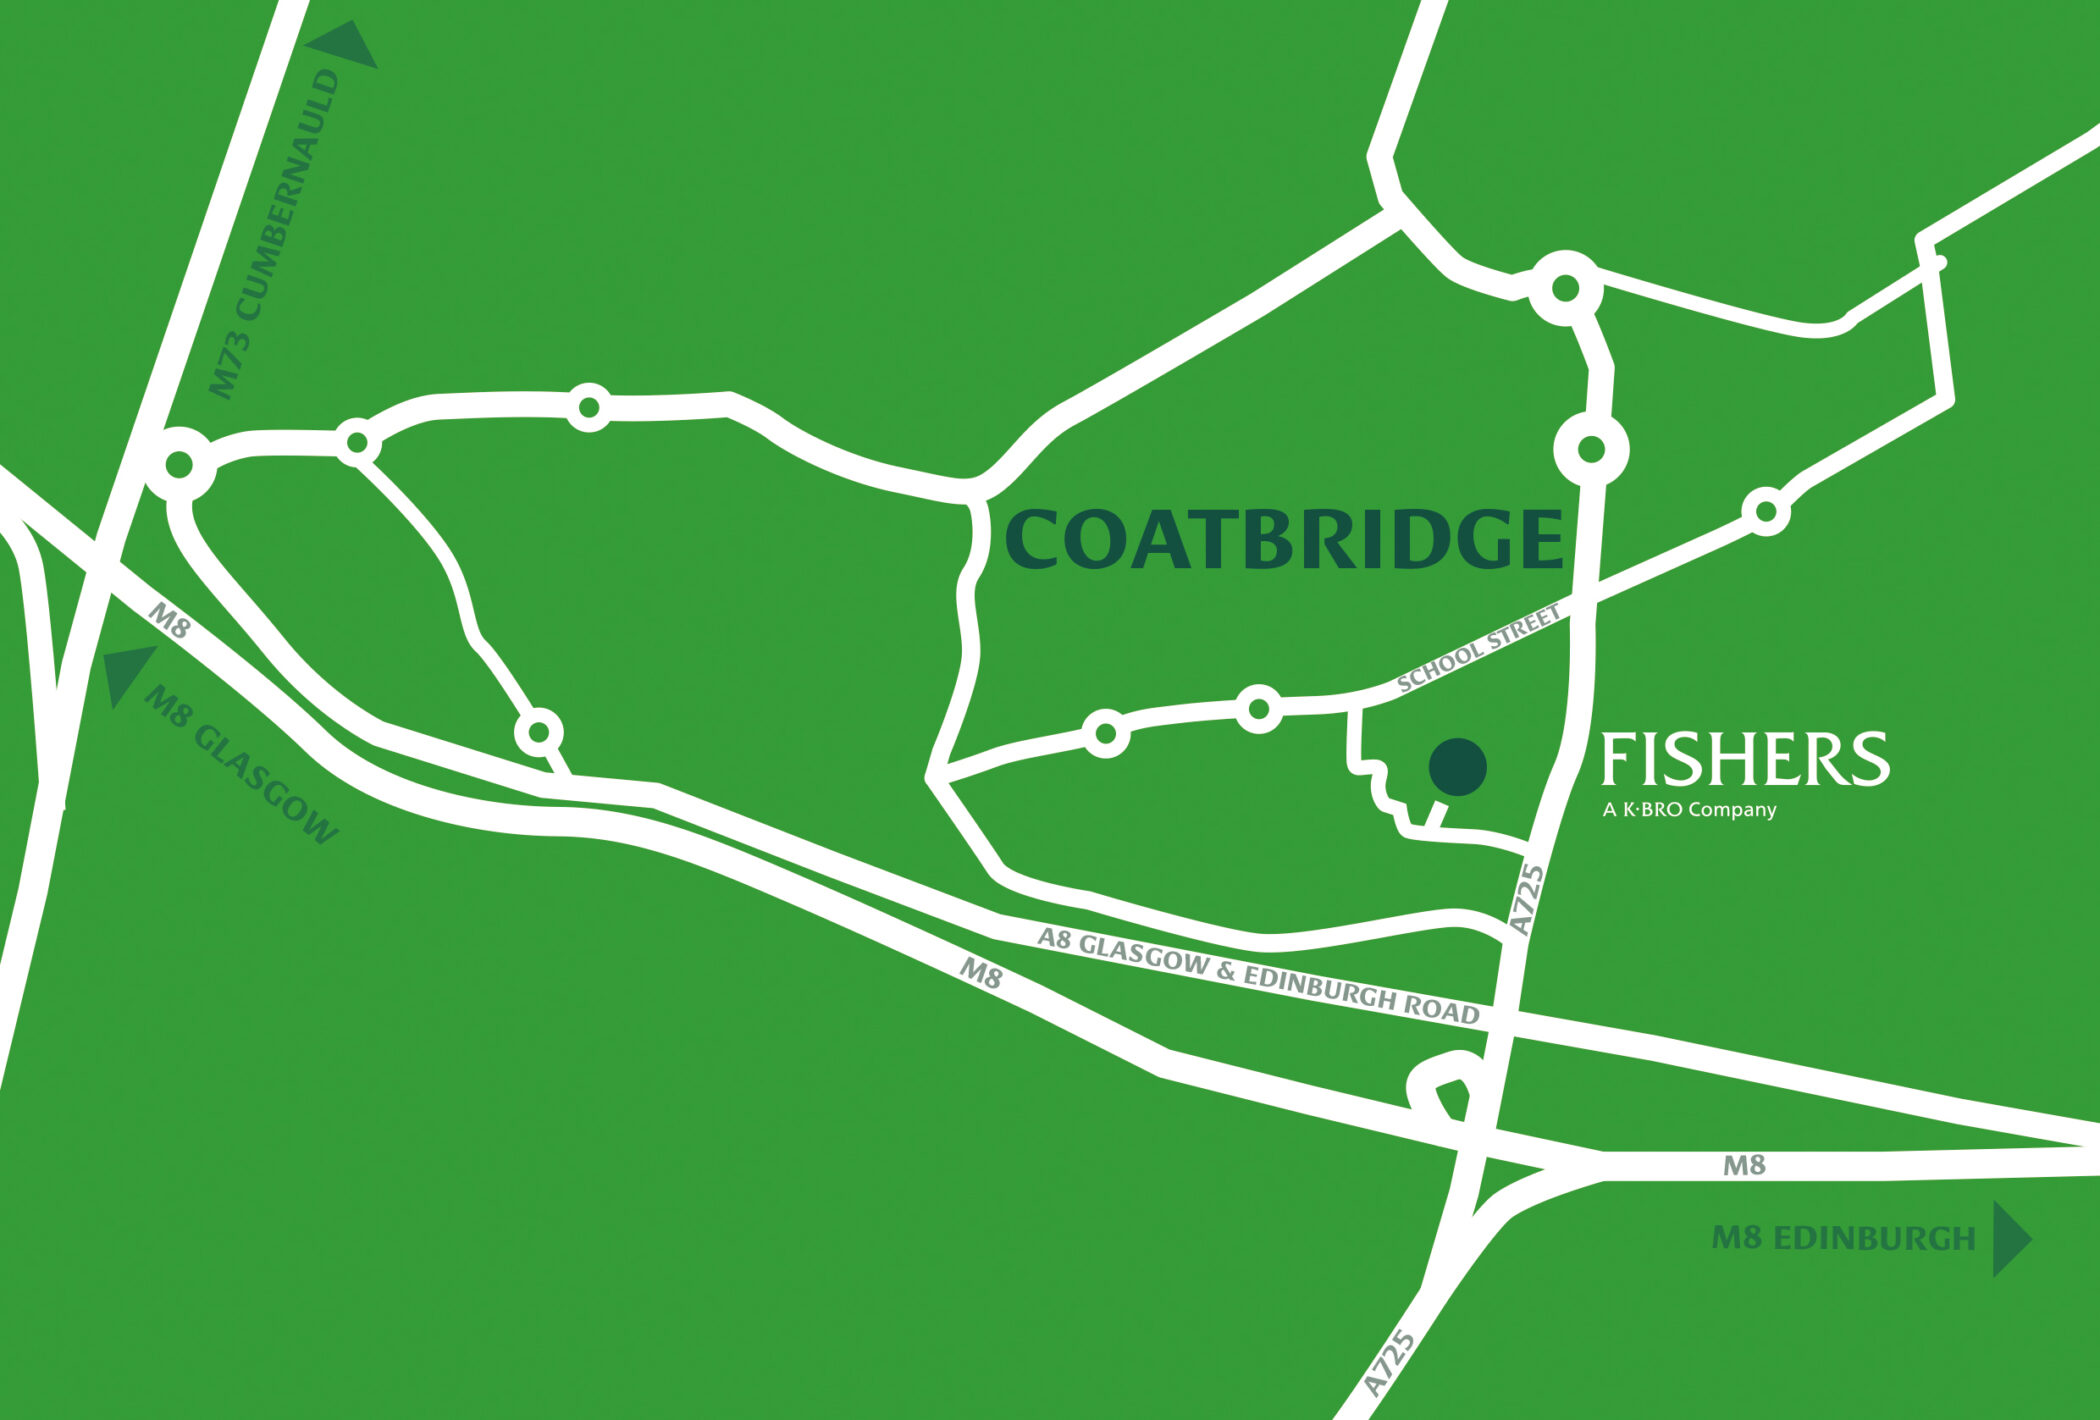 FISHERS_MAP OF Coatbridge